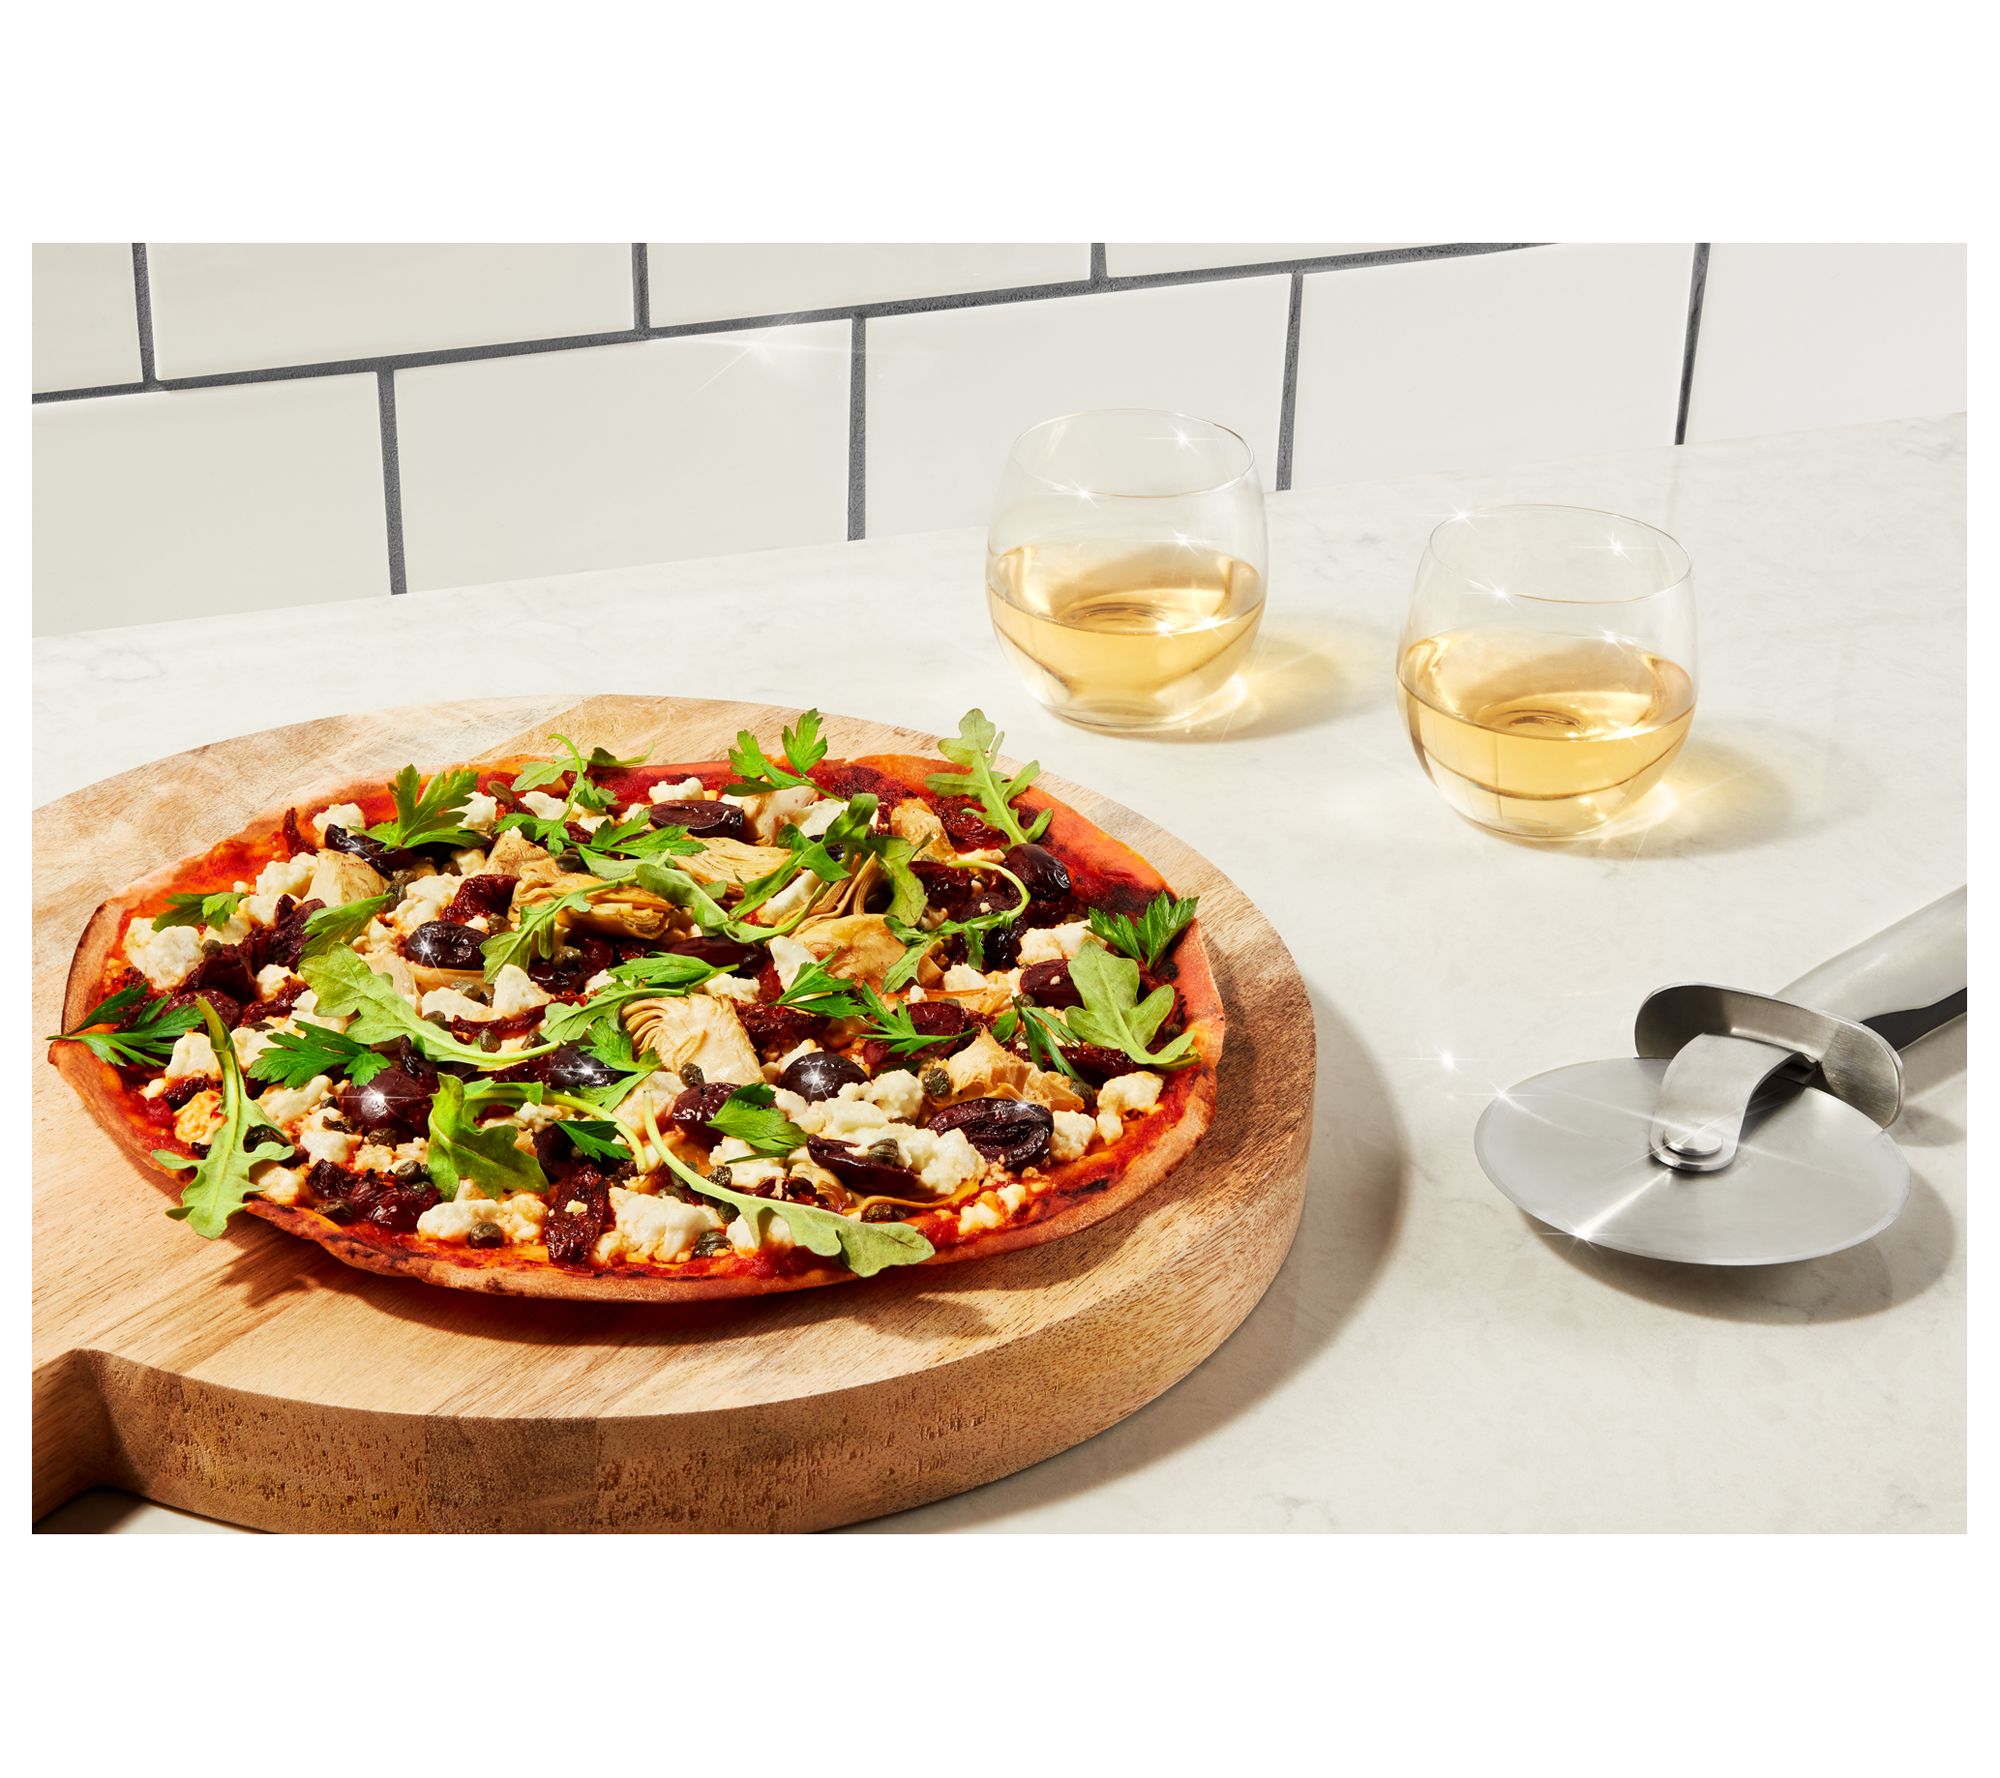 Chefman/Costco Indoor Pizza Oven - page 3 - Home Ovens - Pizza Making Forum